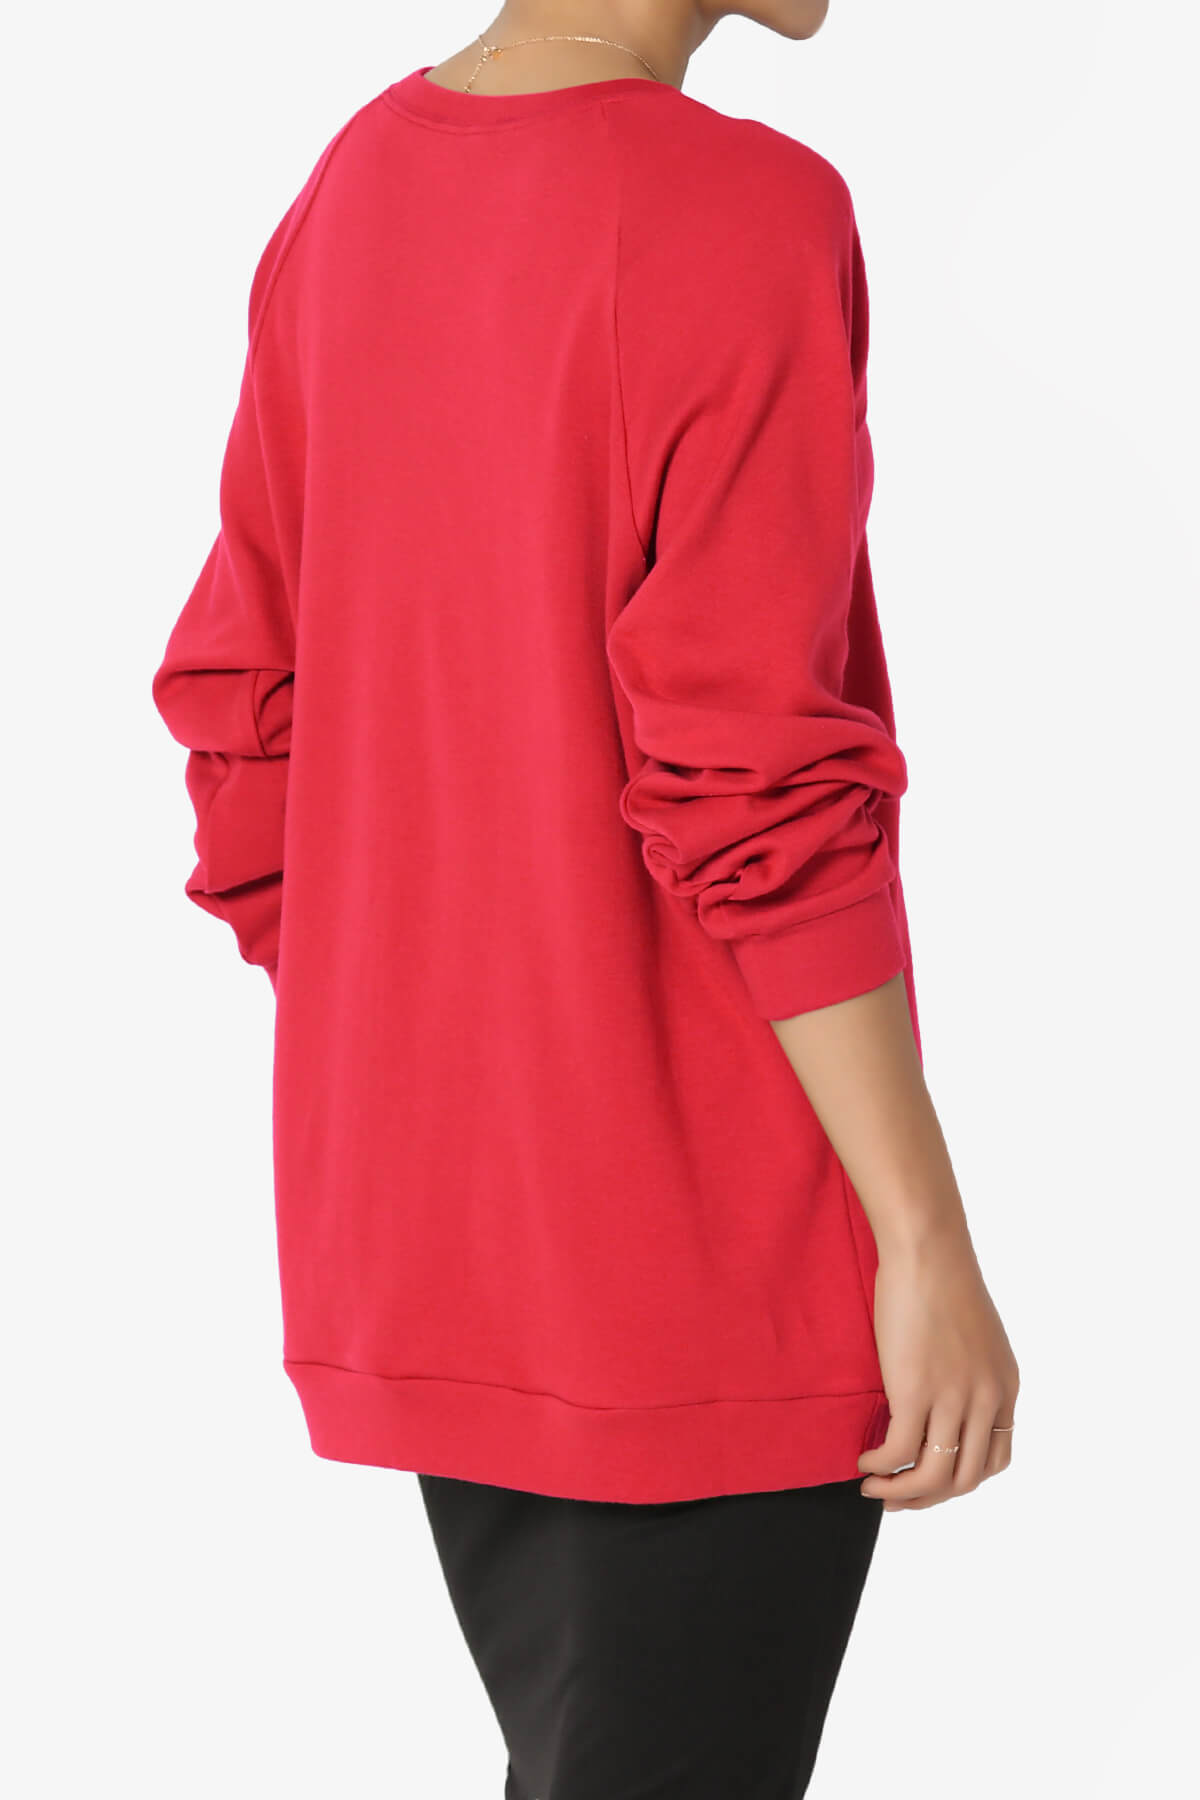 Carlene Cotton Raglan Sleeve Pullover Top RED_4